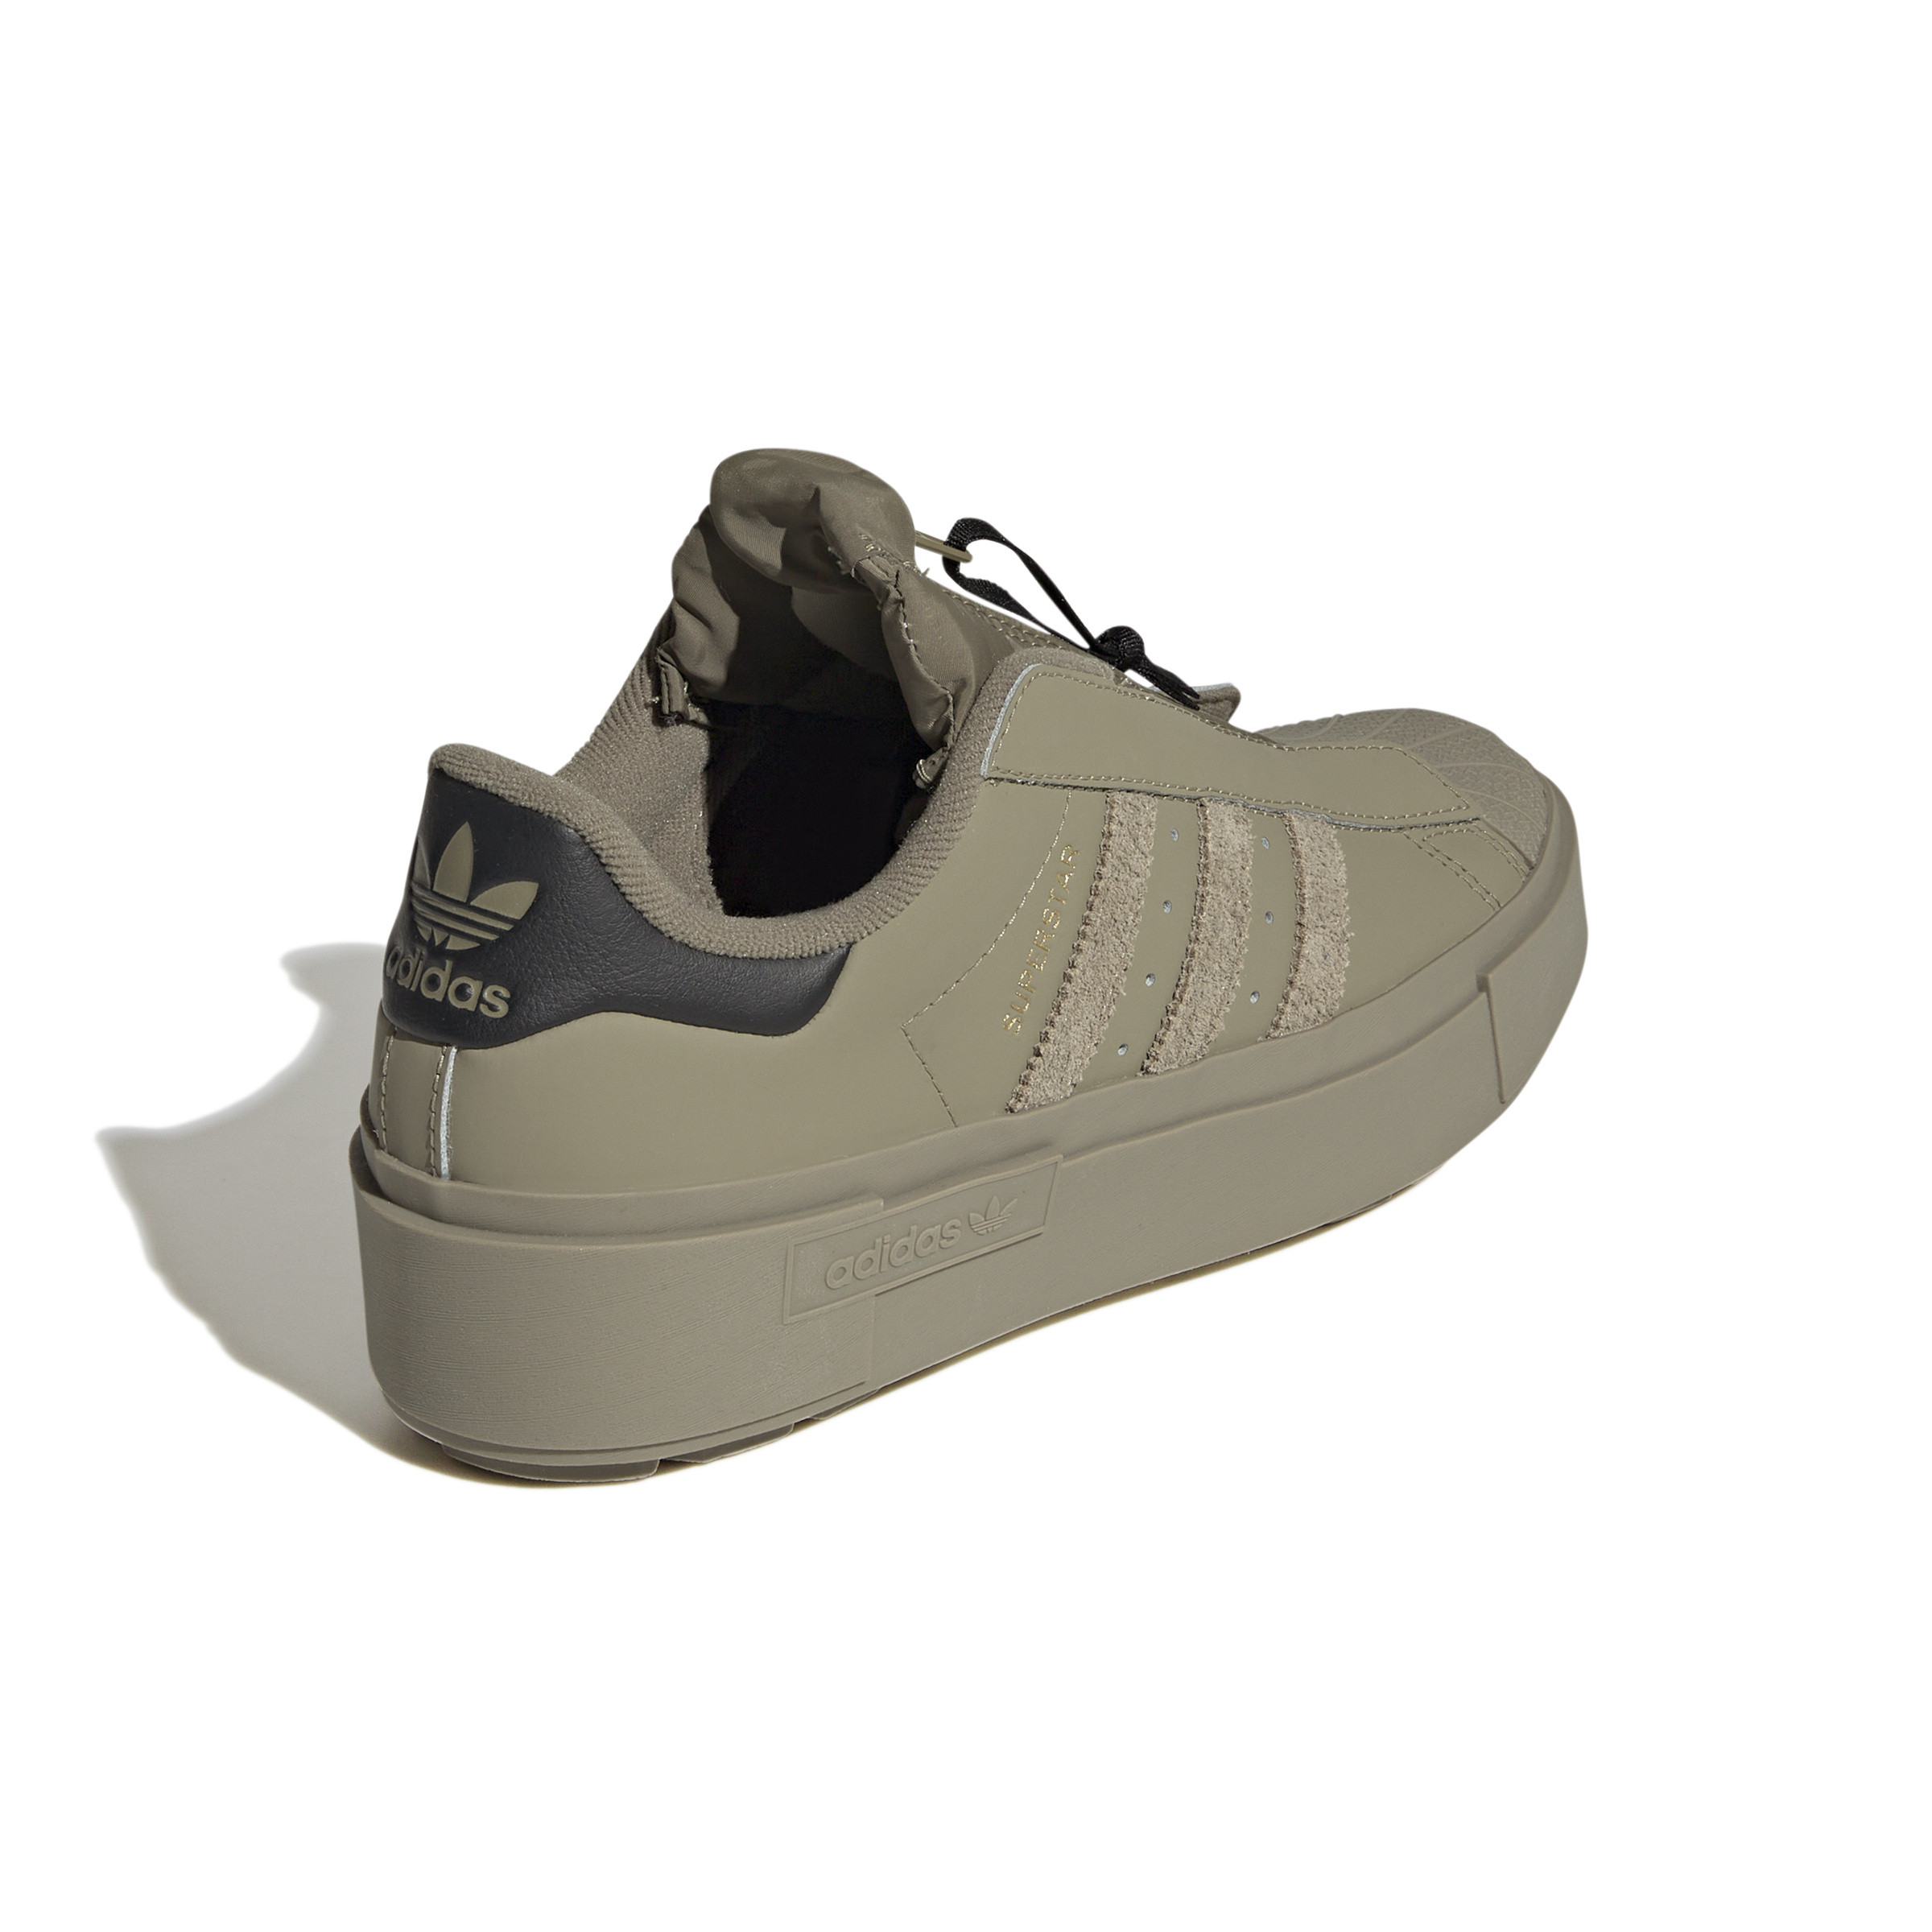 Adidas - Superstar Shoes Bonega, Green, large image number 2